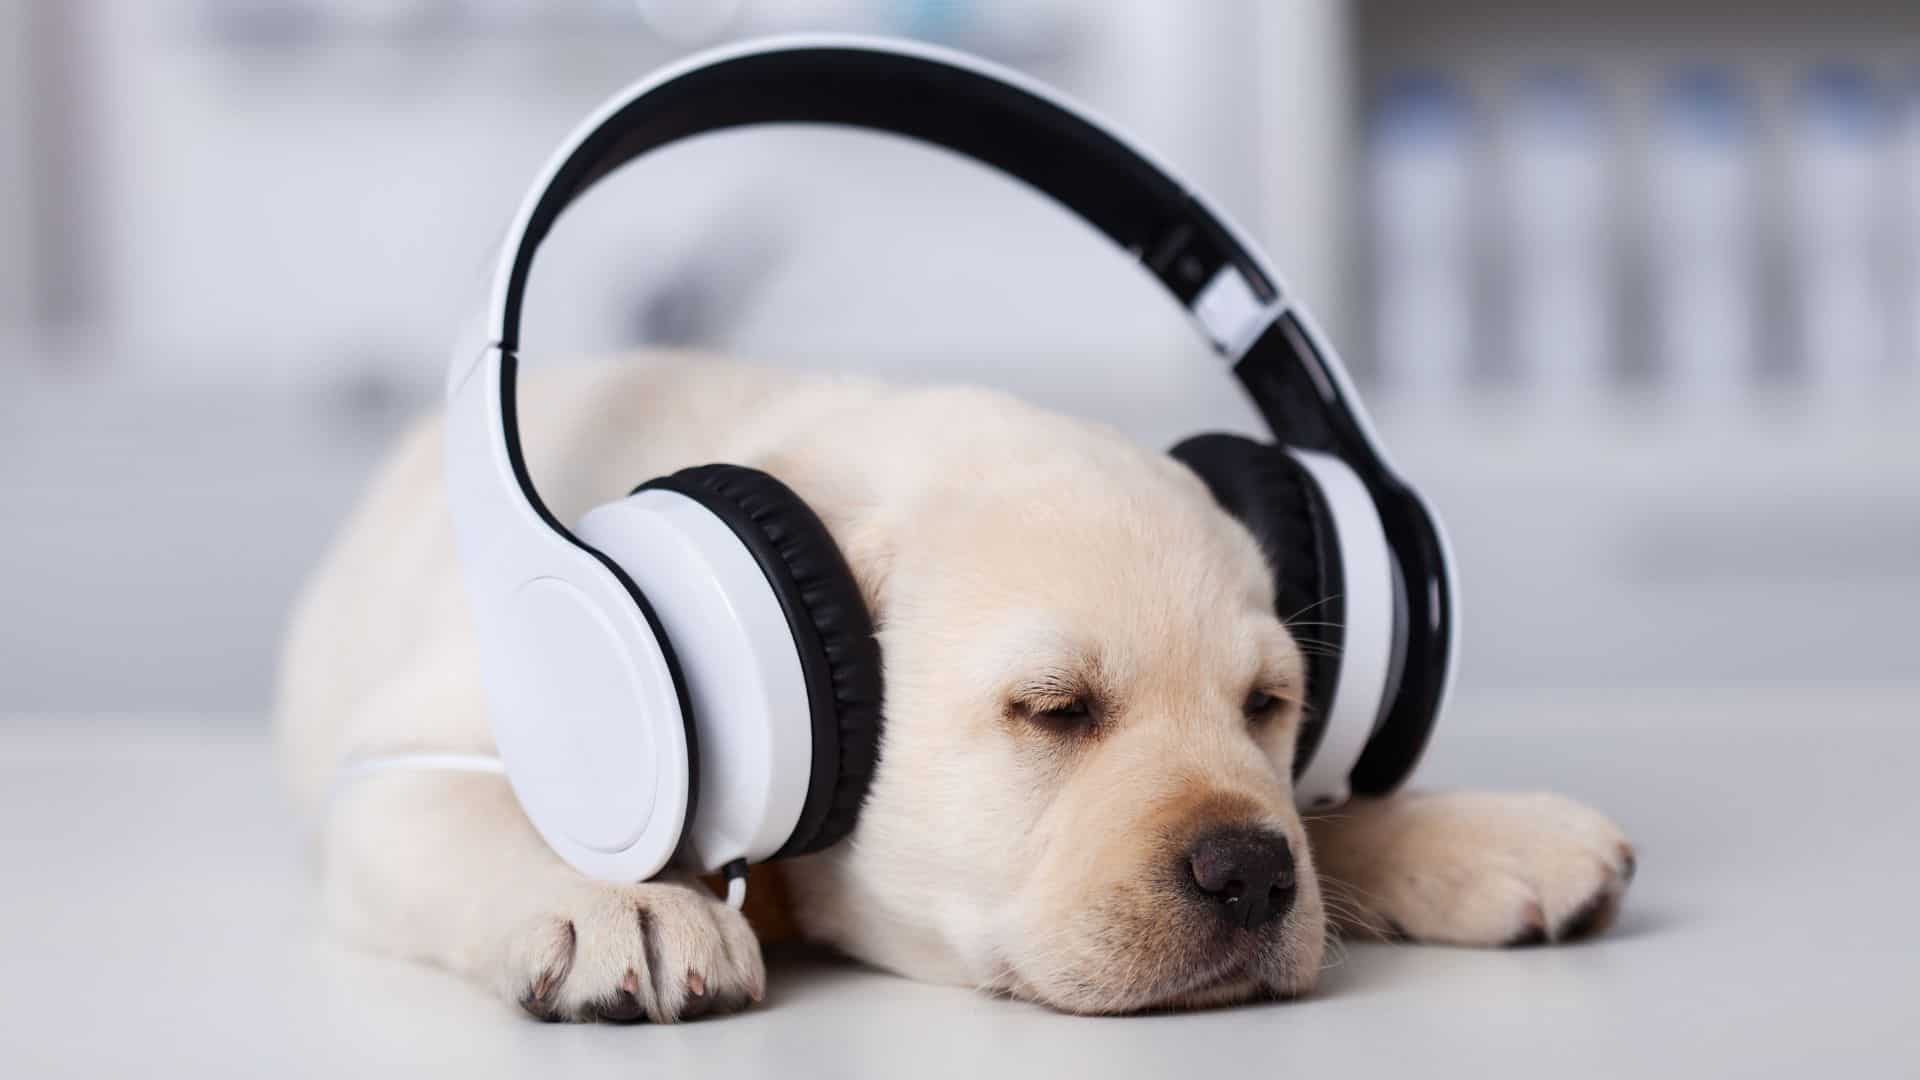 dog with headphones on his head